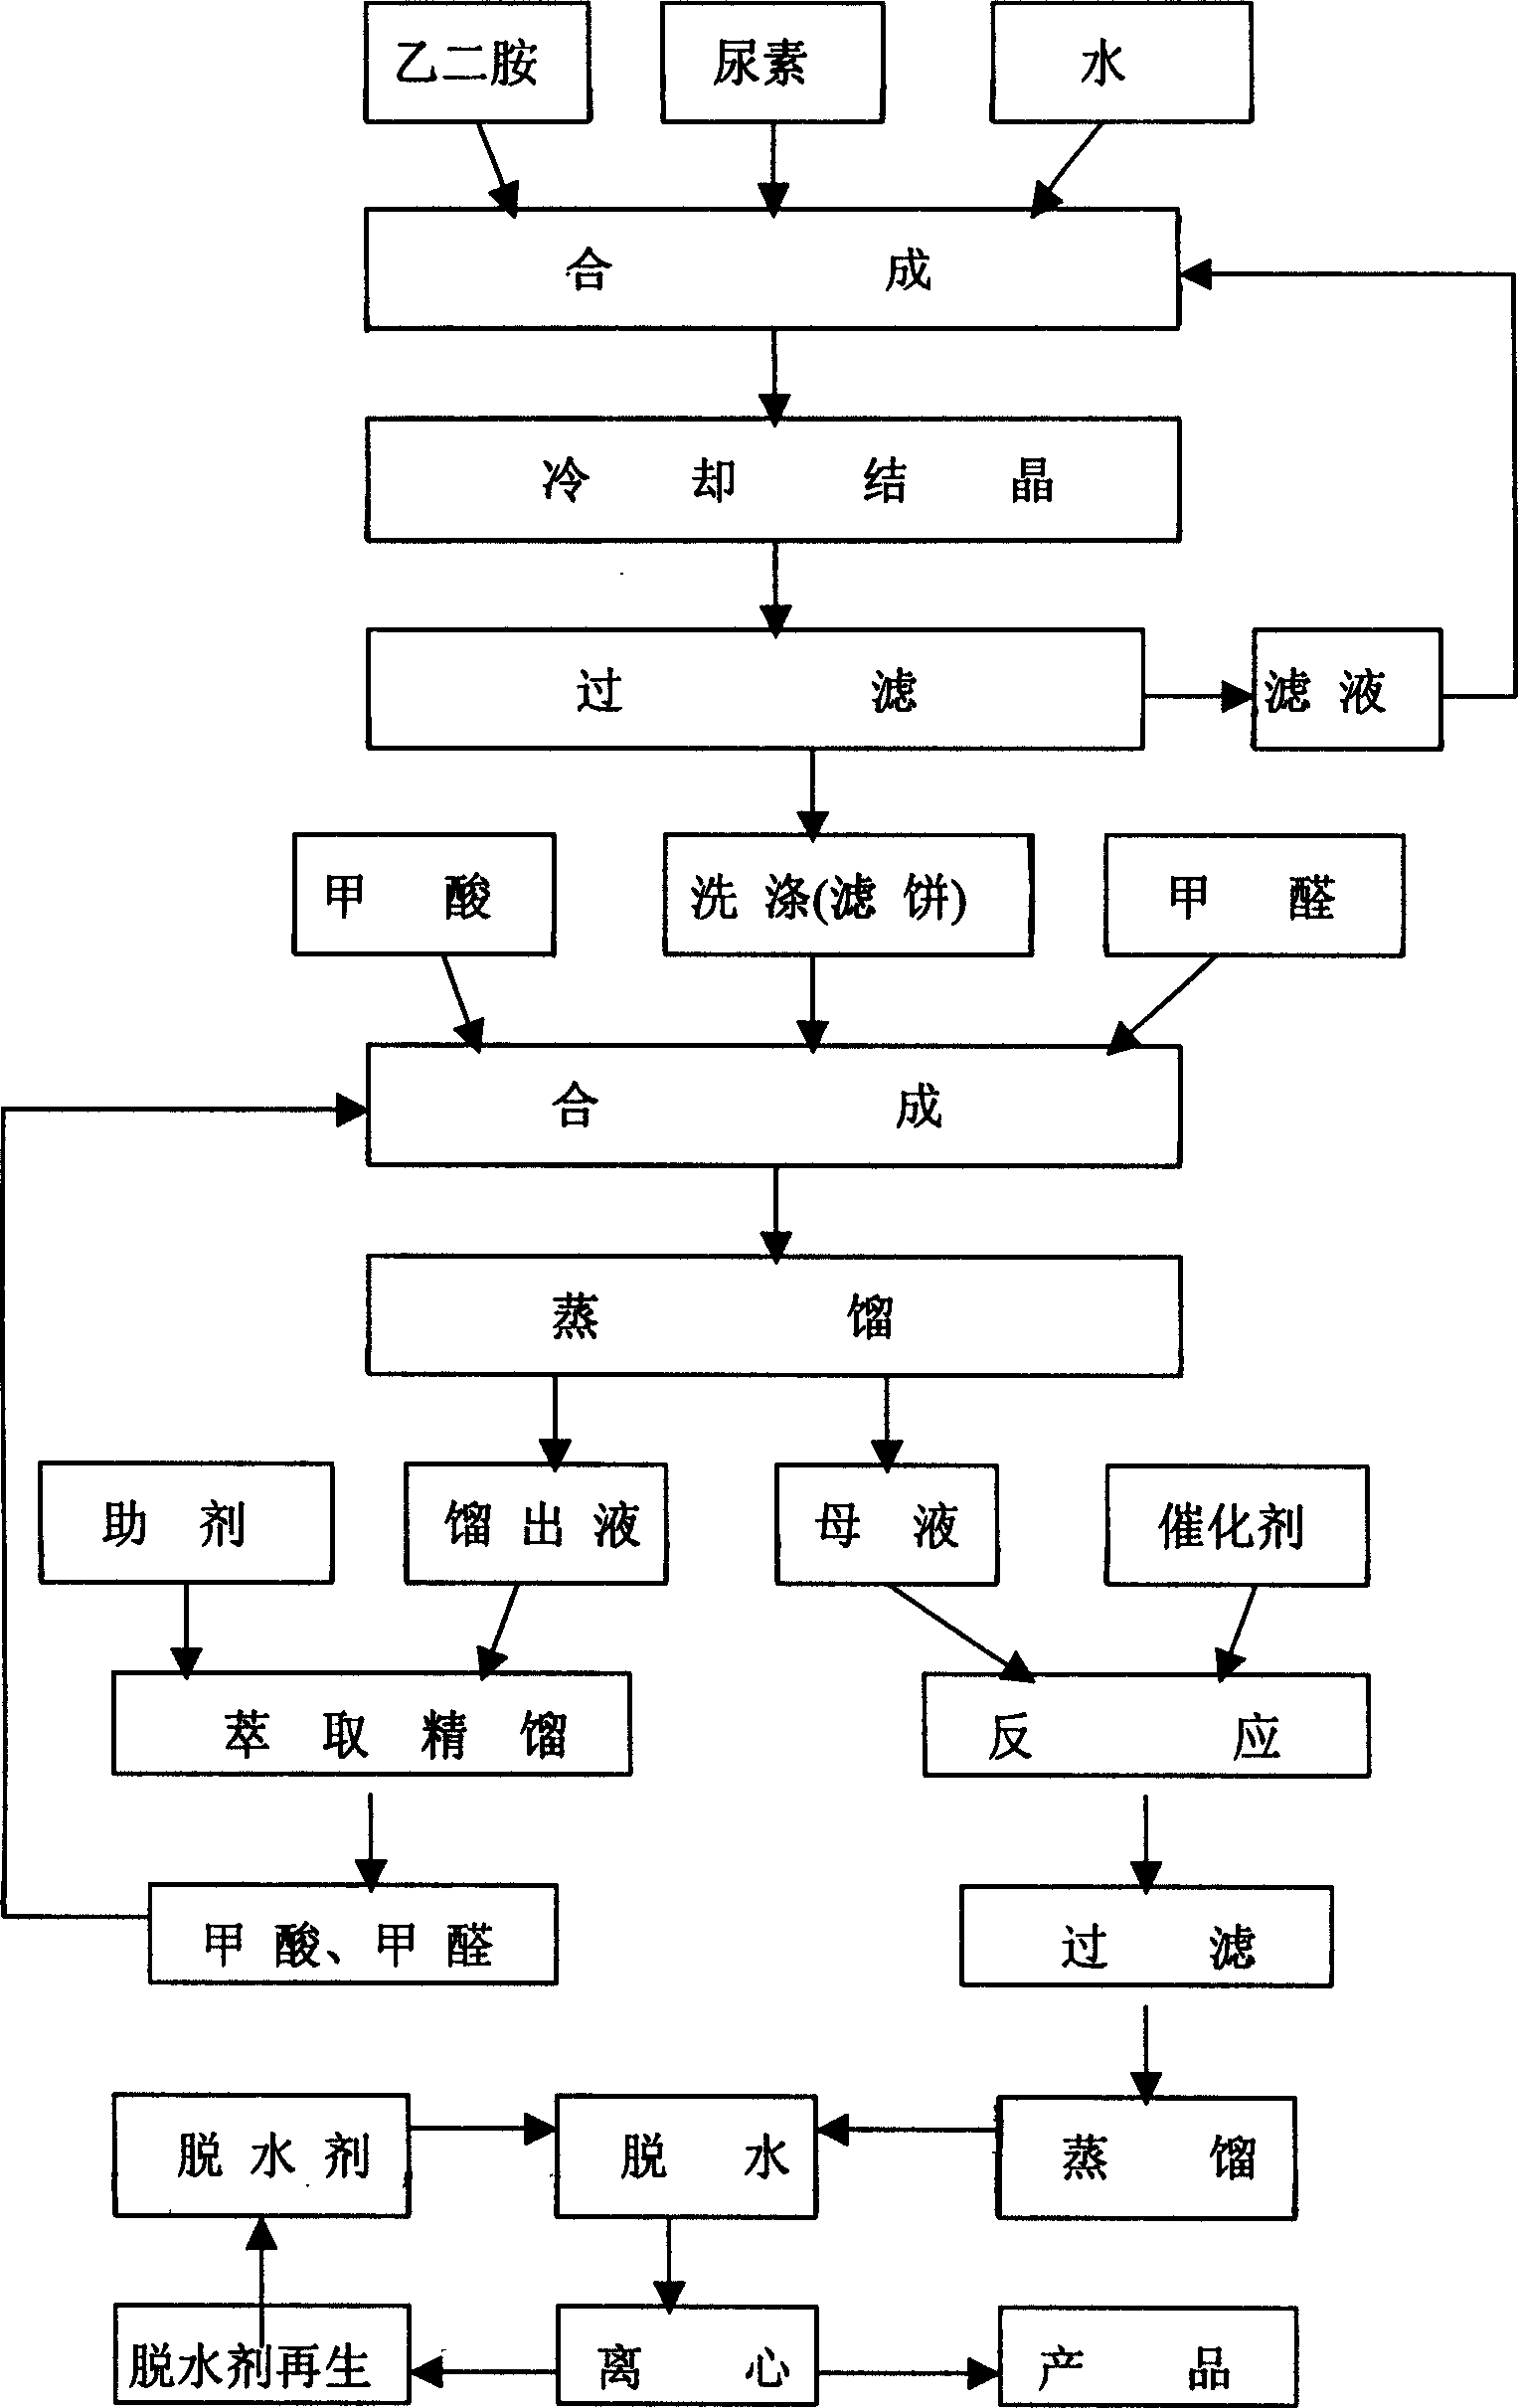 Method for producing 1, 3-dimethyl -2-imidazolinone